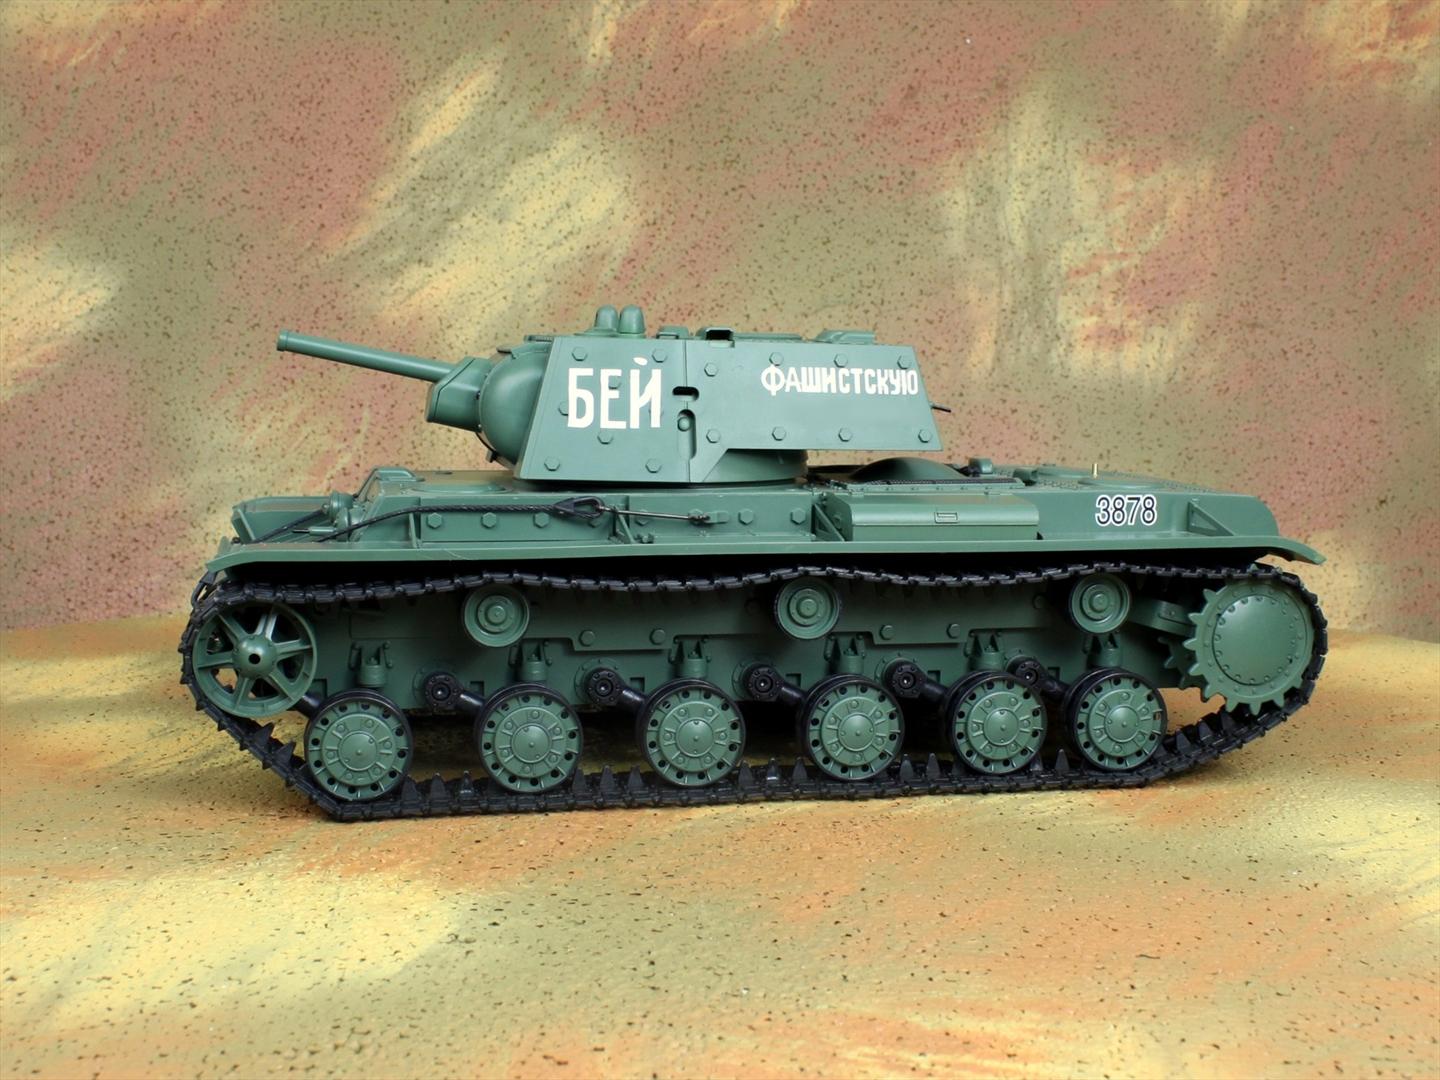 HENG-LONG Toys 3878 RC Scale Model Tank, World War II Soviet Union (Russia) KV-1'S Ehkranami Remote Control Tank.